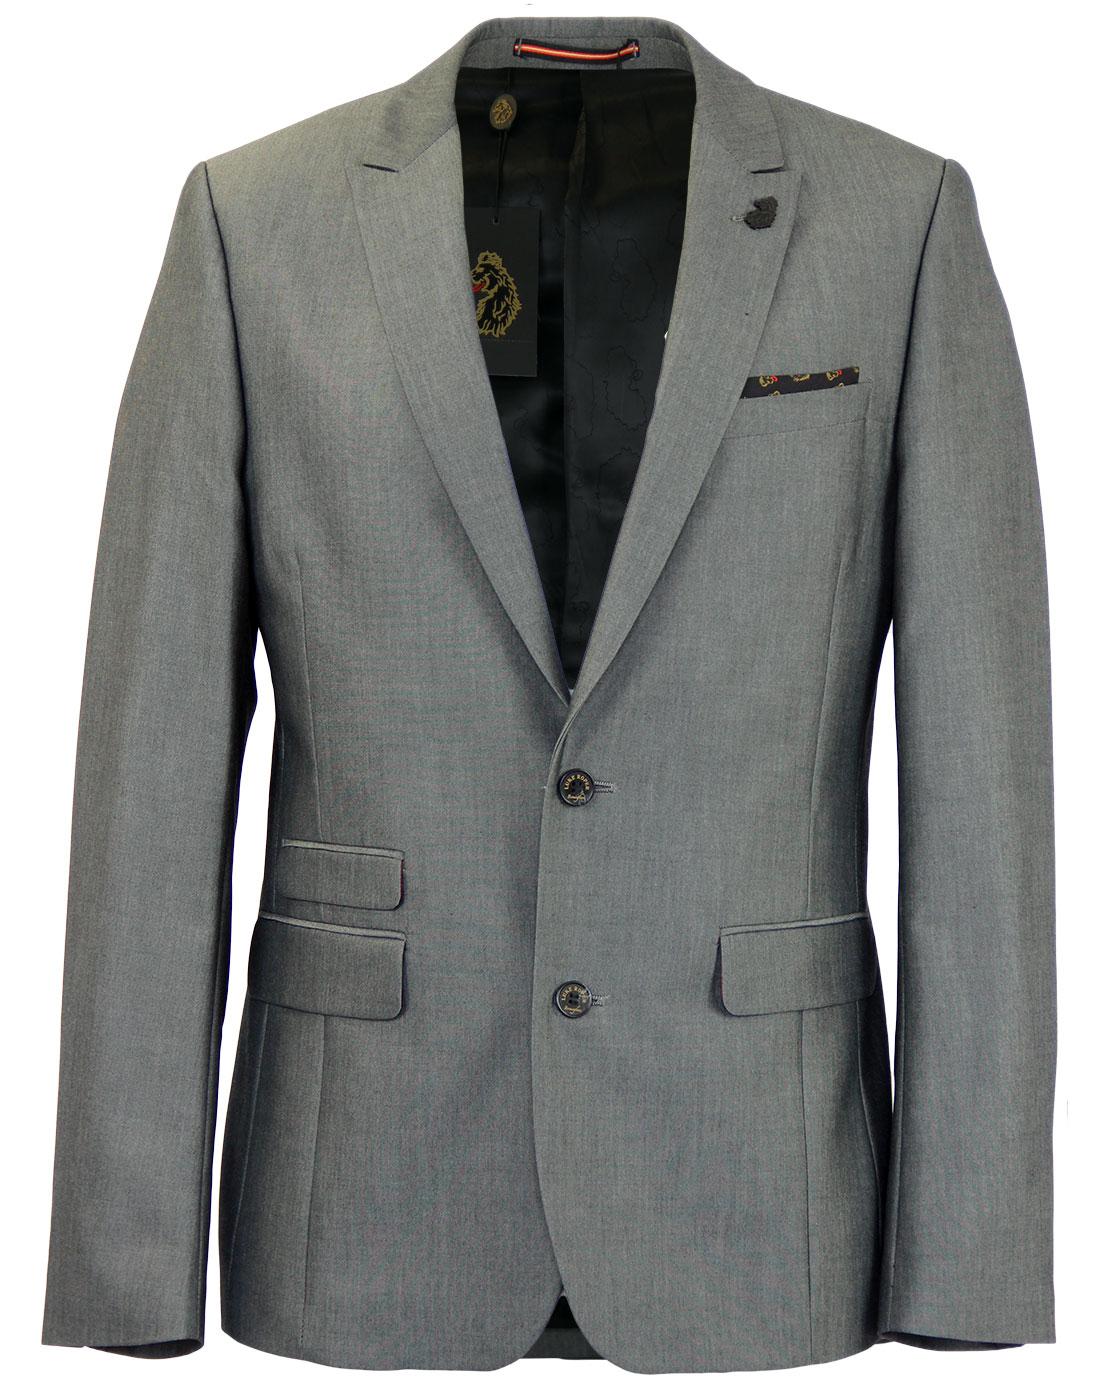 LUKE ROPER Guilty Retro Mod 2 Button Tailored Suit Jacket Grey